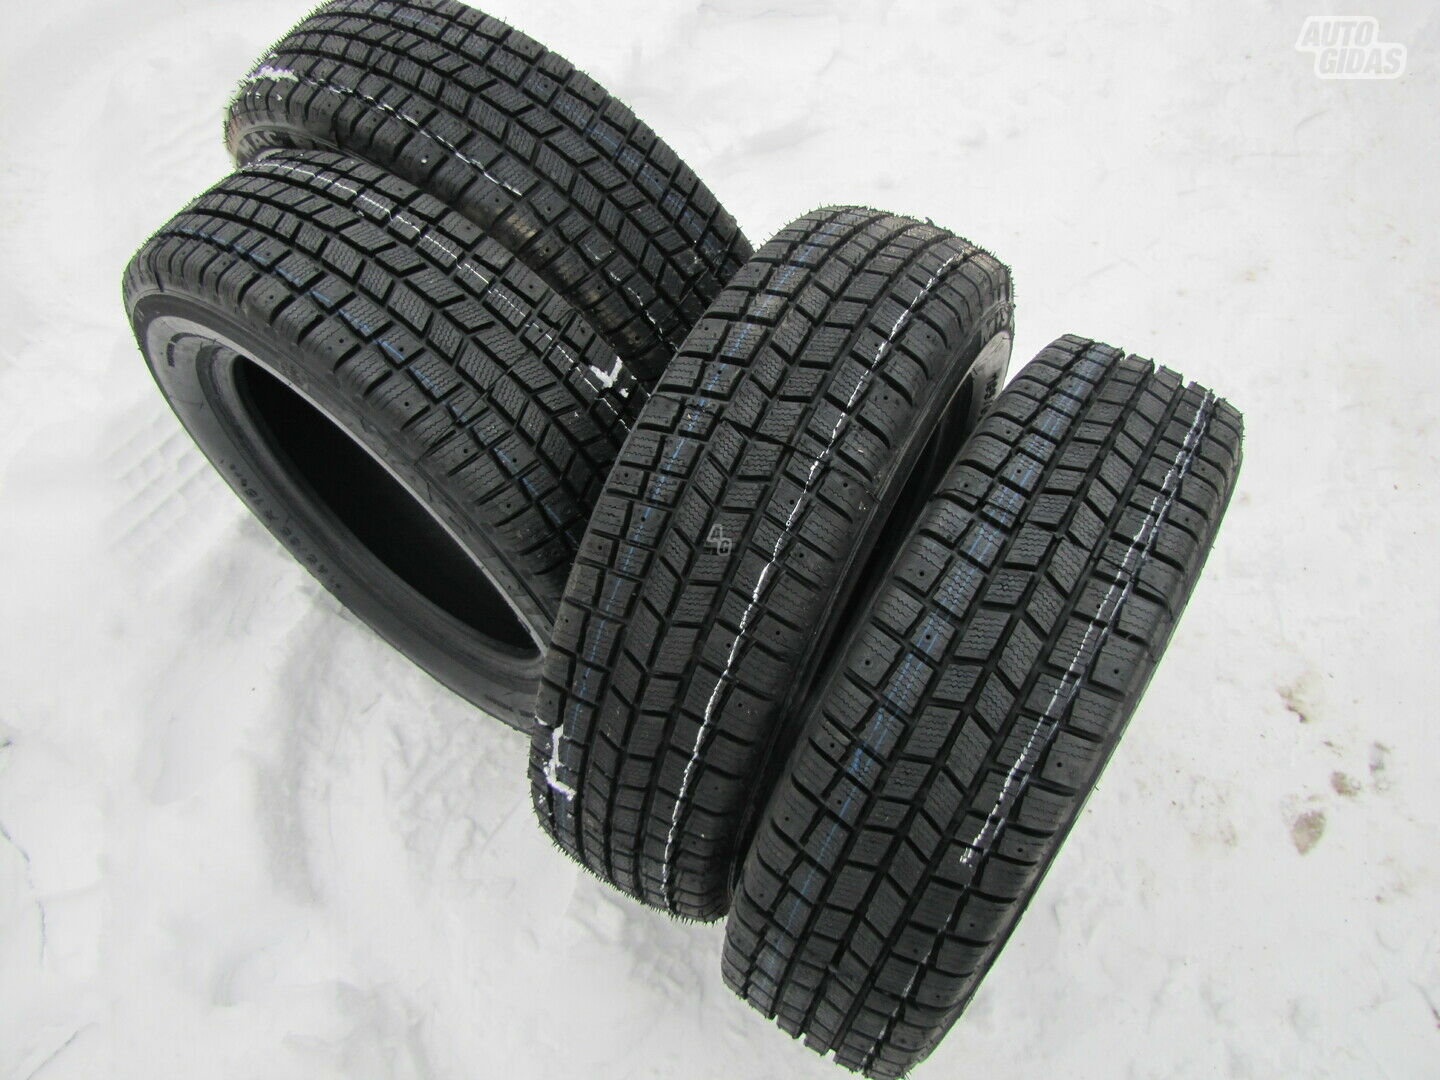 Agi MAC RIPPER M+S A R15 winter tyres passanger car